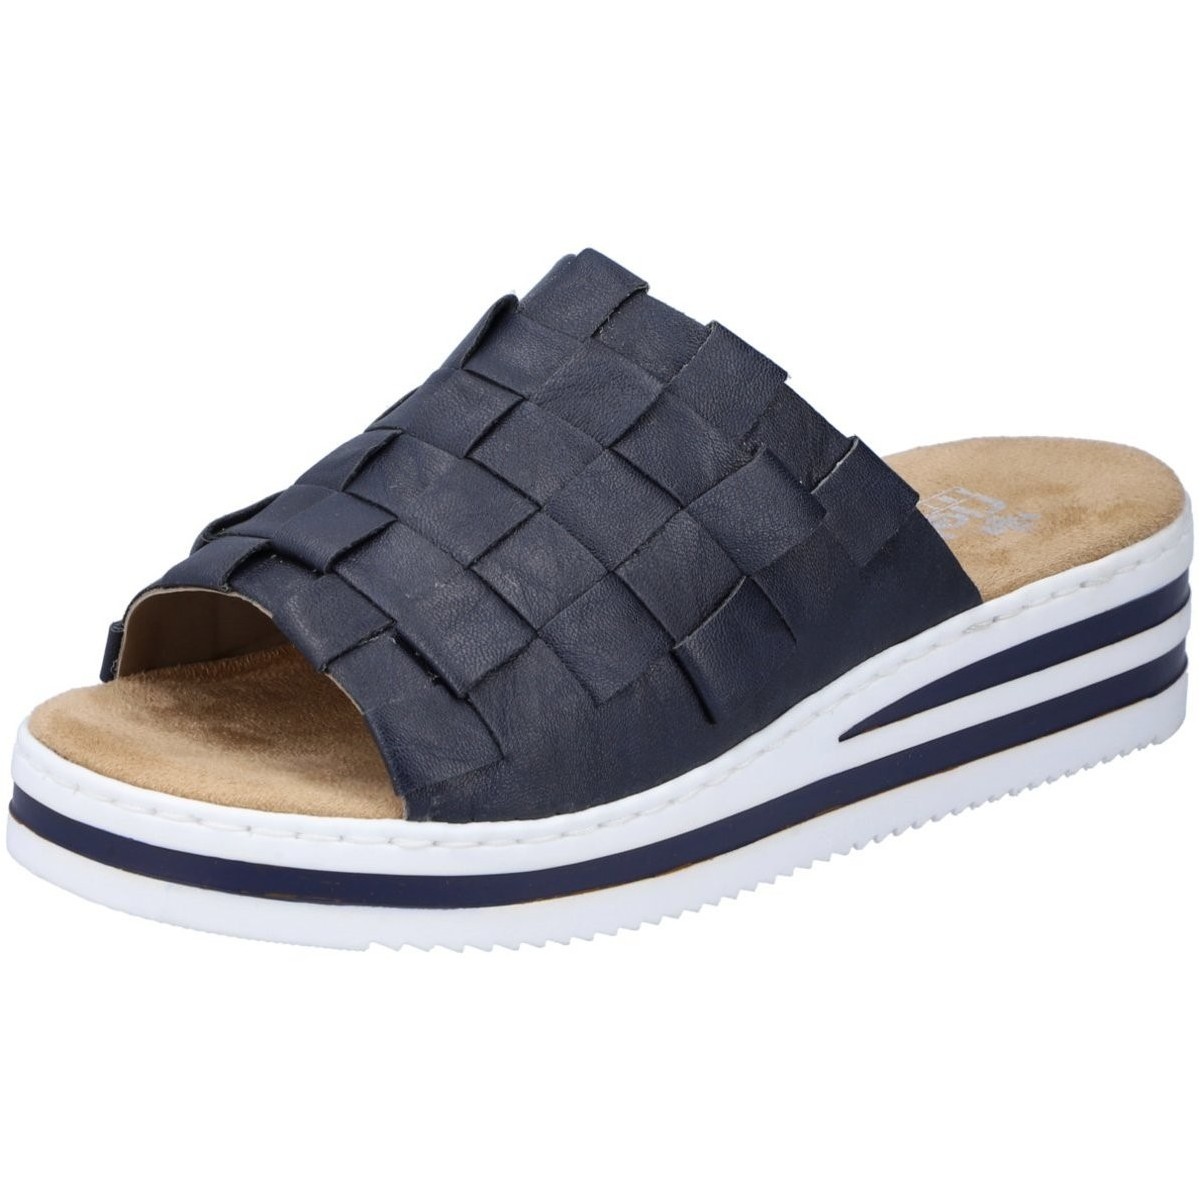 Schuhe Damen Pantoletten / Clogs Rieker Pantoletten V0288-14 Blau